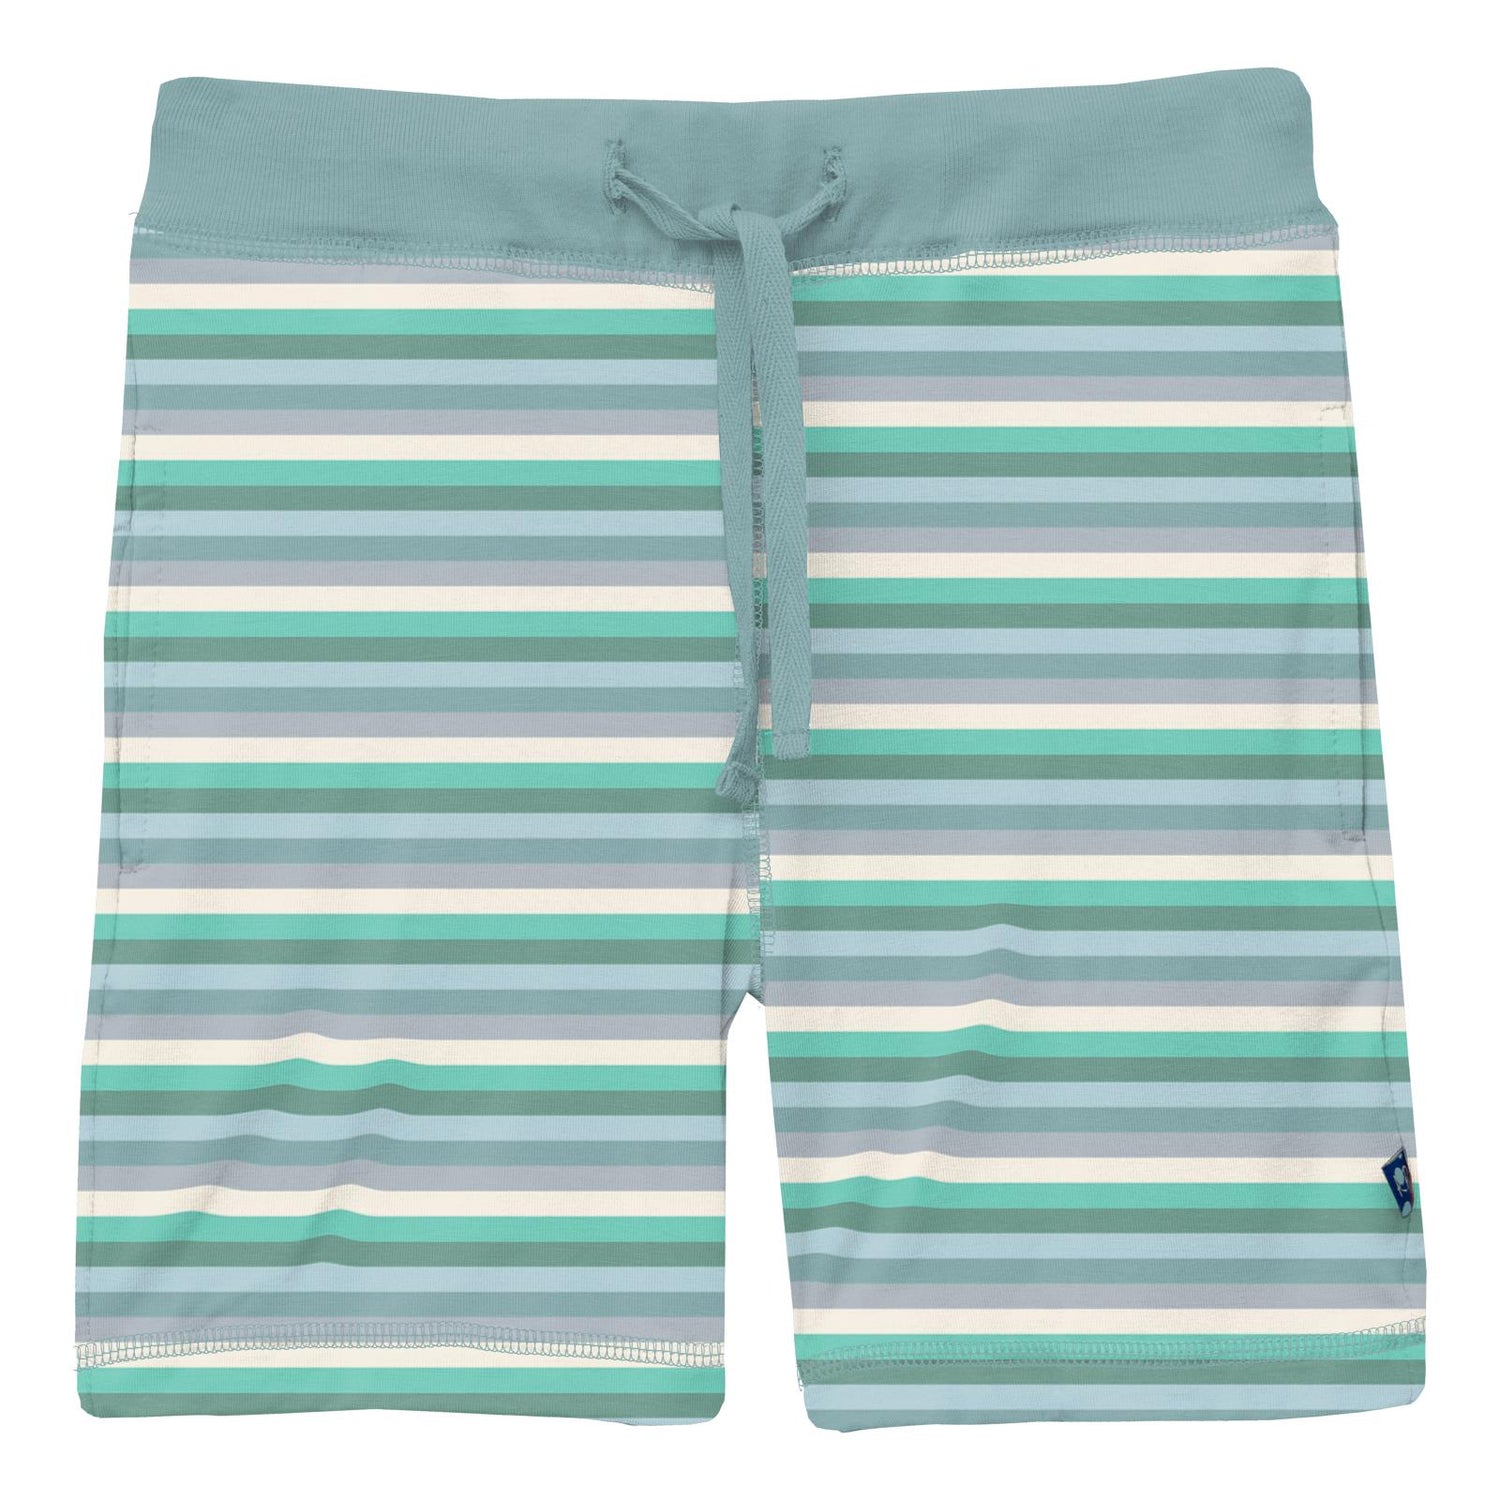 Print Lightweight Drawstring Shorts in April Showers Stripe